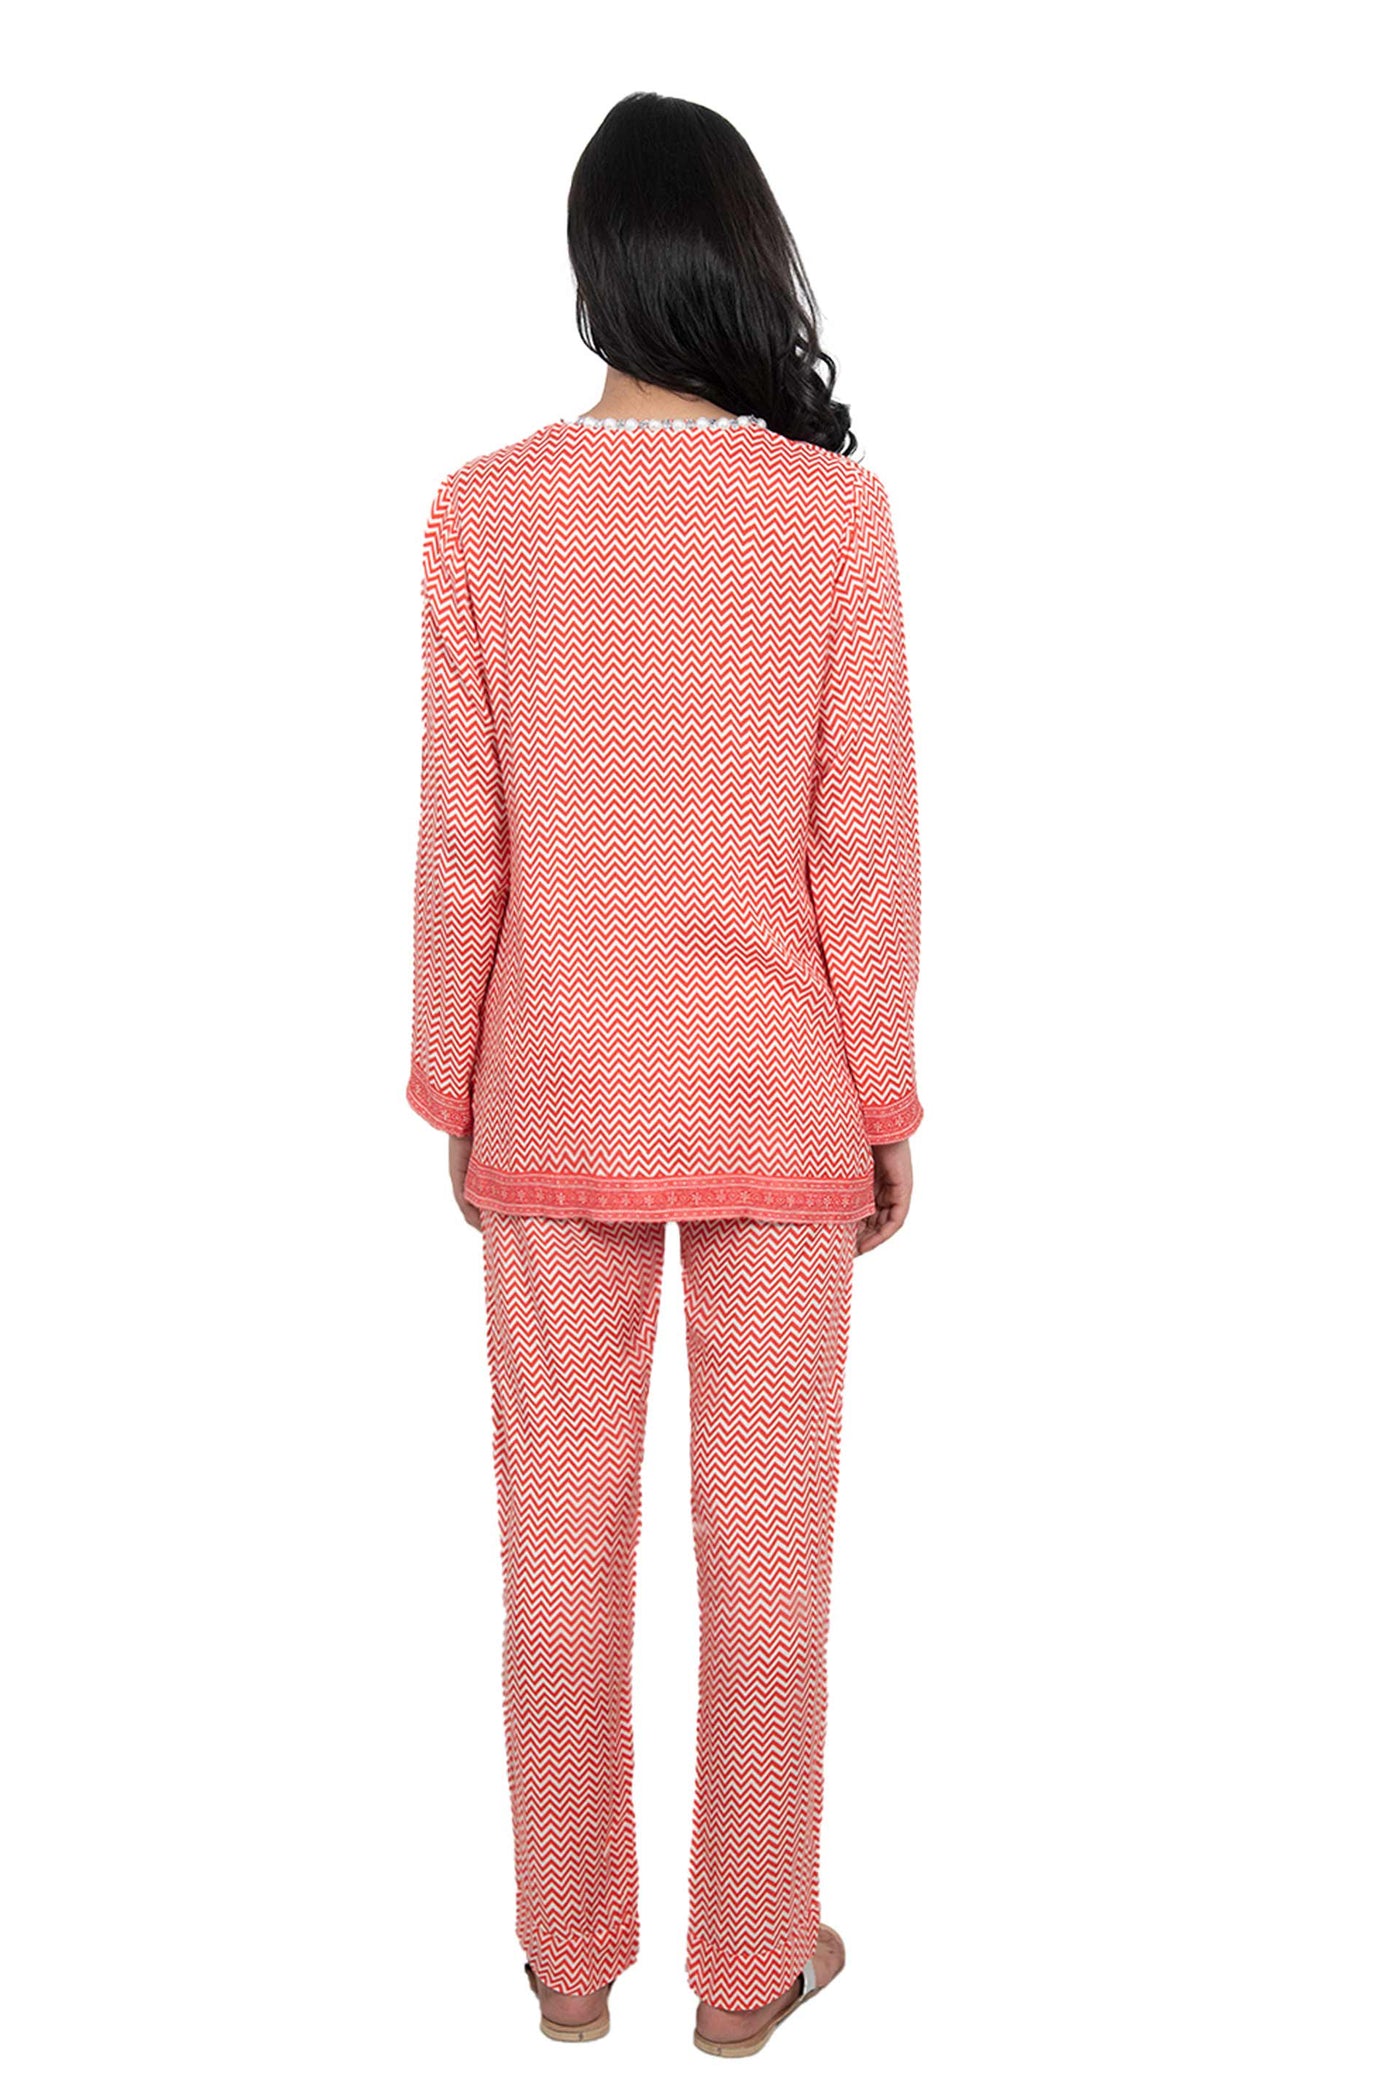 Monisha jaising Chevron Pearl Set red white online shopping melange singapore indian designer wear